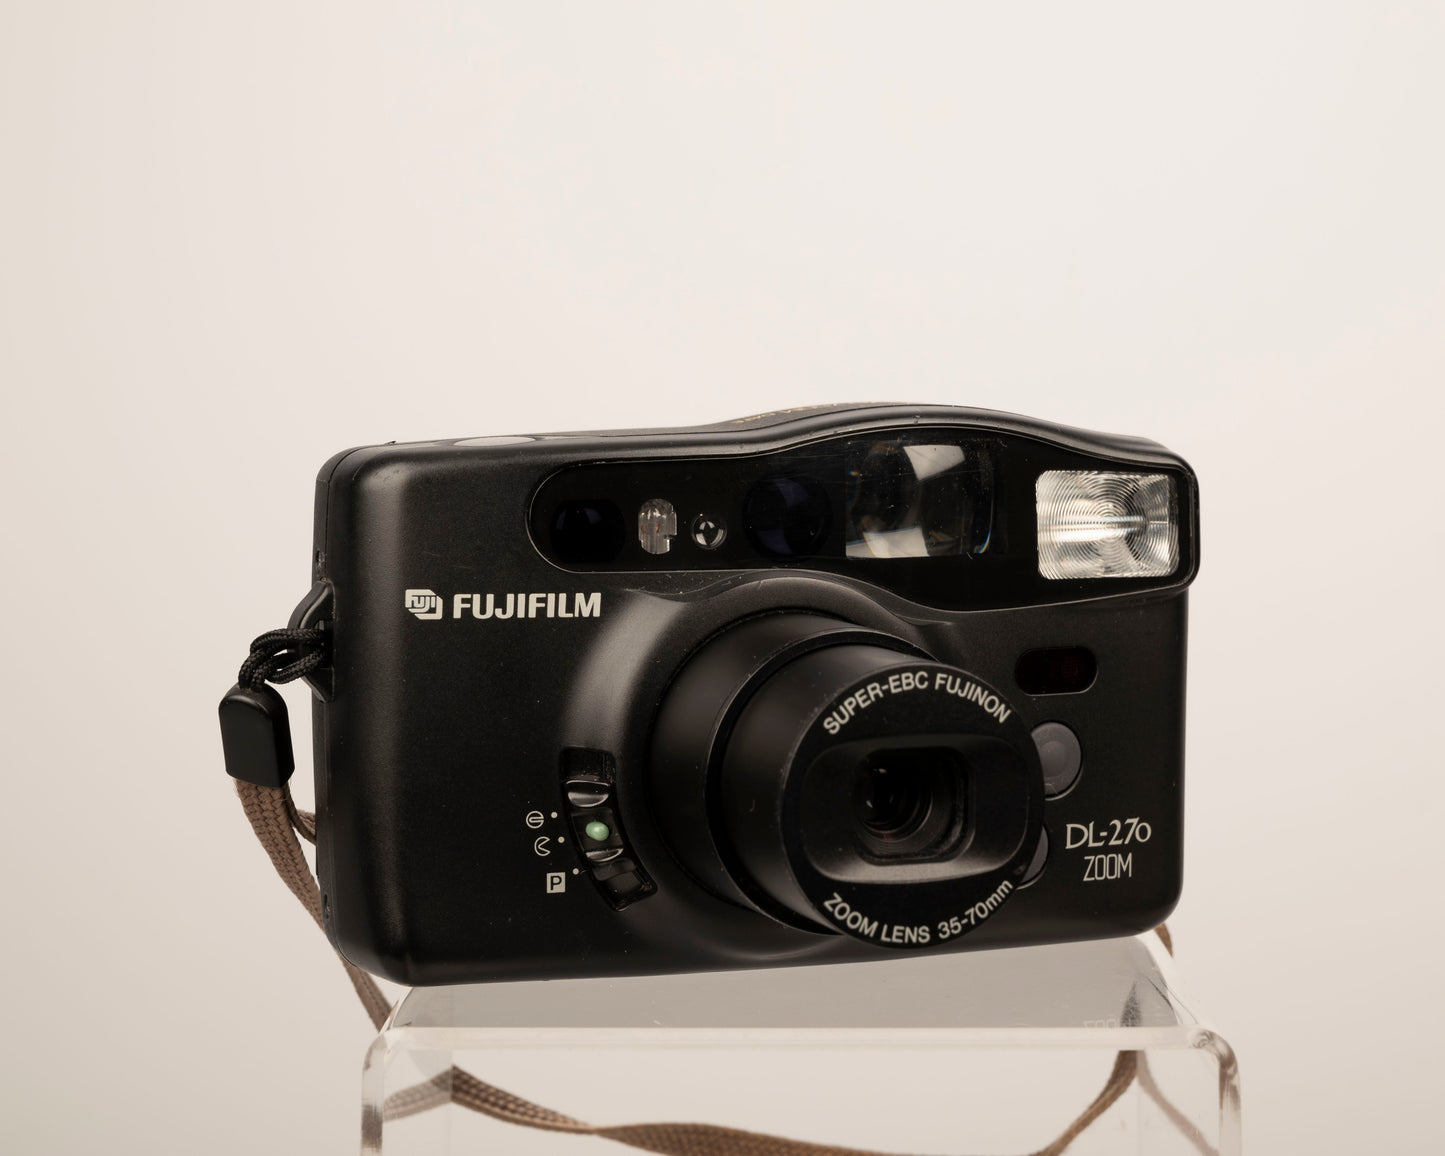 Fujifilm DL-270 Zoom 35mm camera with original box, case, and manual (serial 80500003)